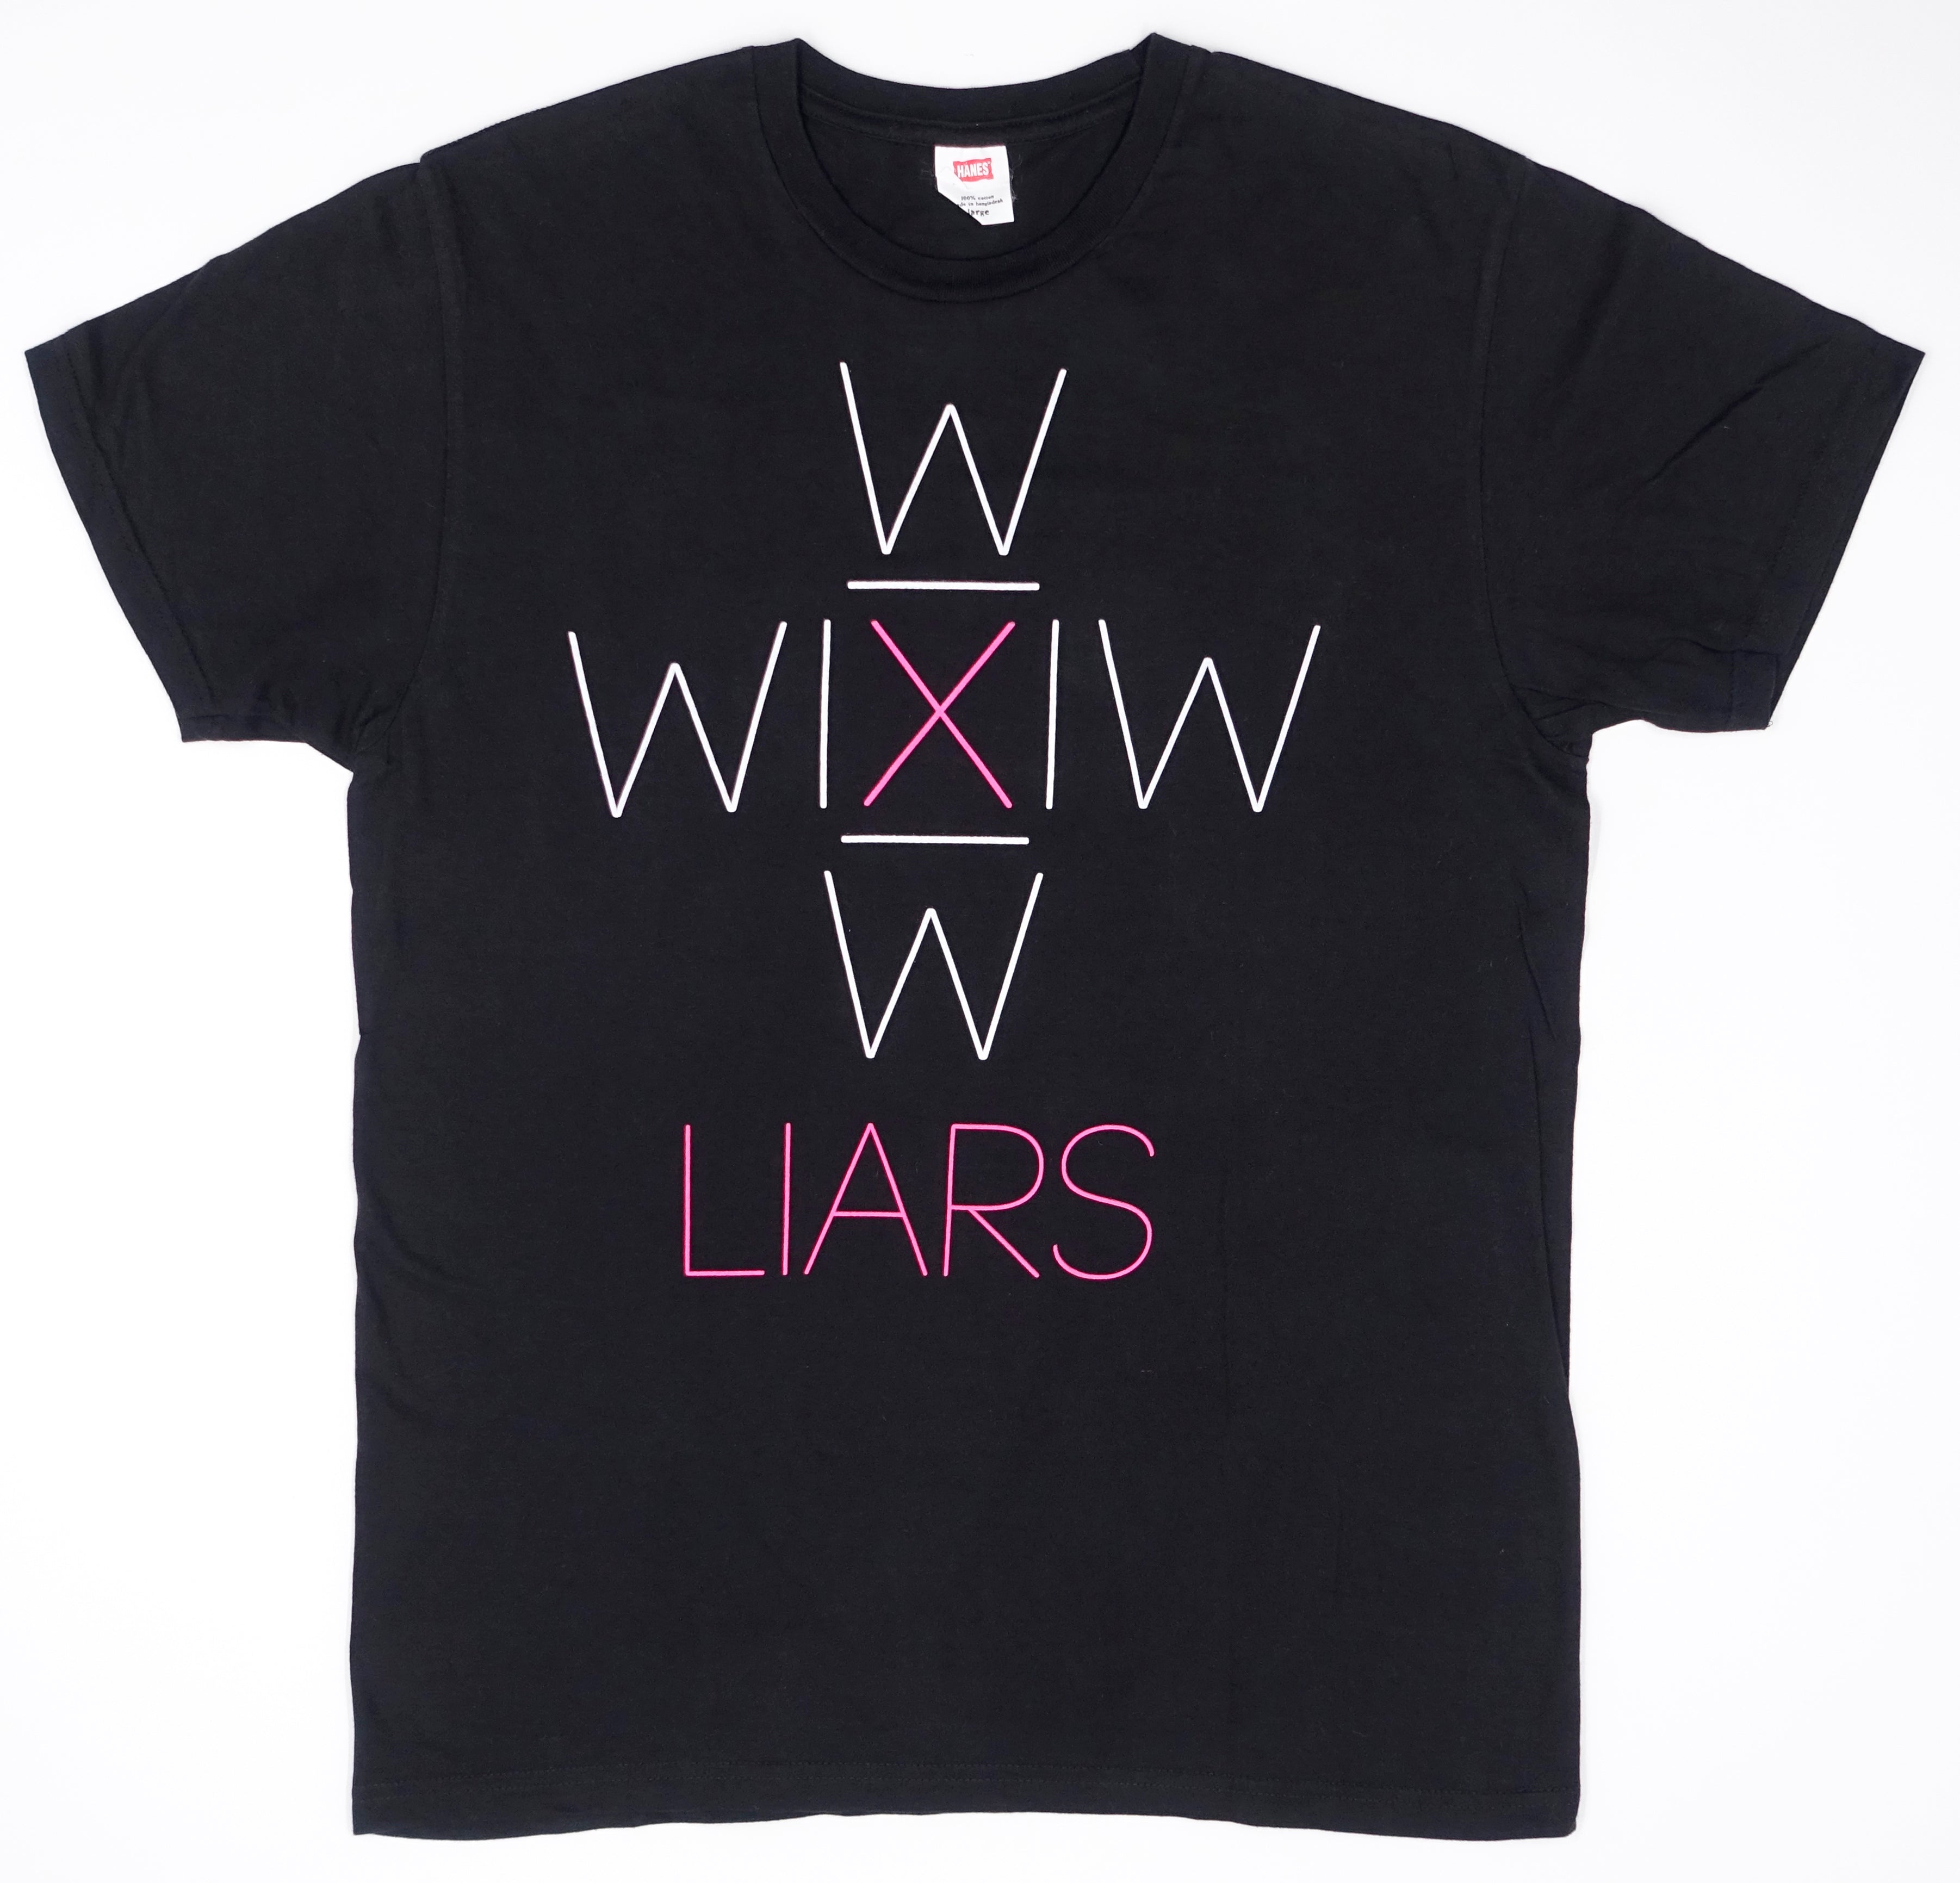 Liars - WIXIW 2012 Tour Shirt Size Large